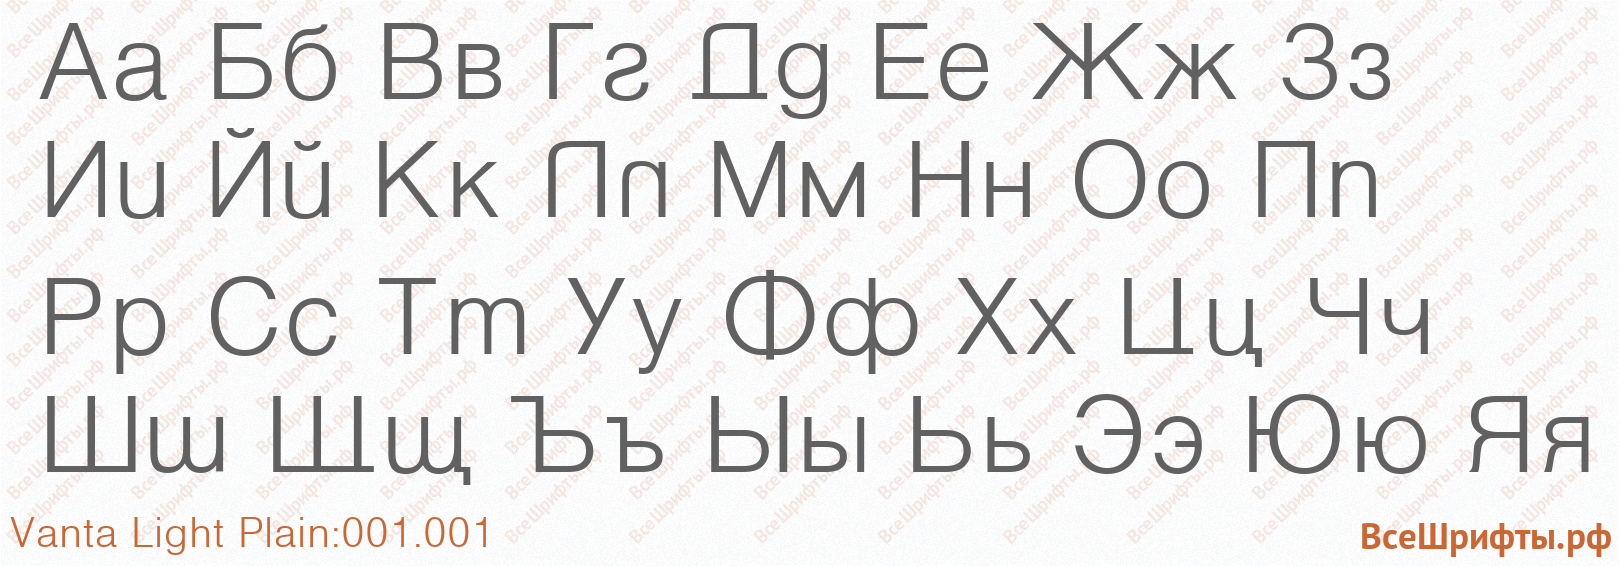 Шрифт Vanta Light Plain:001.001 с русскими буквами